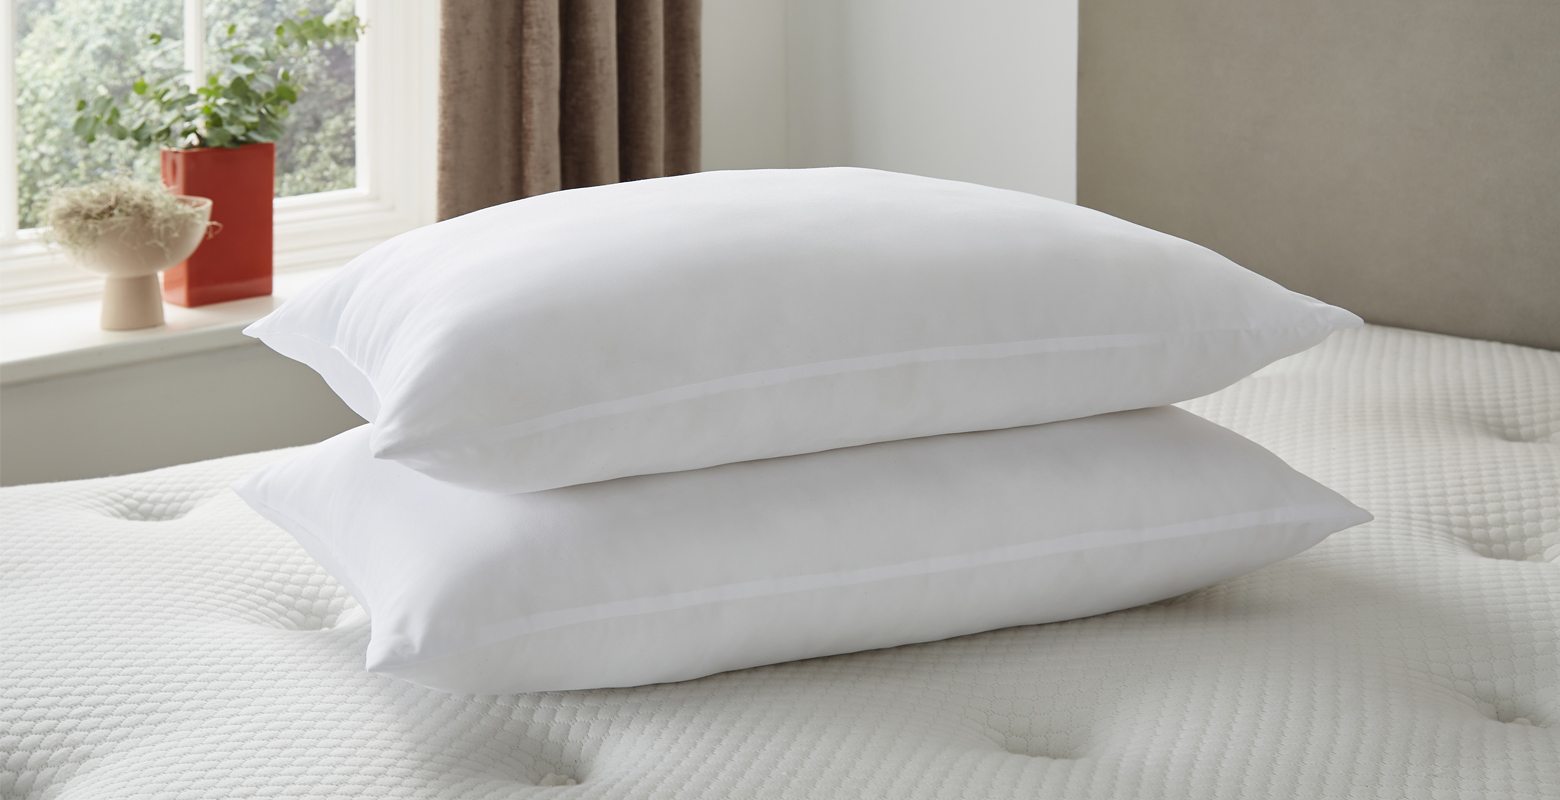 Martex Warm Nights Soft Touch Pillow